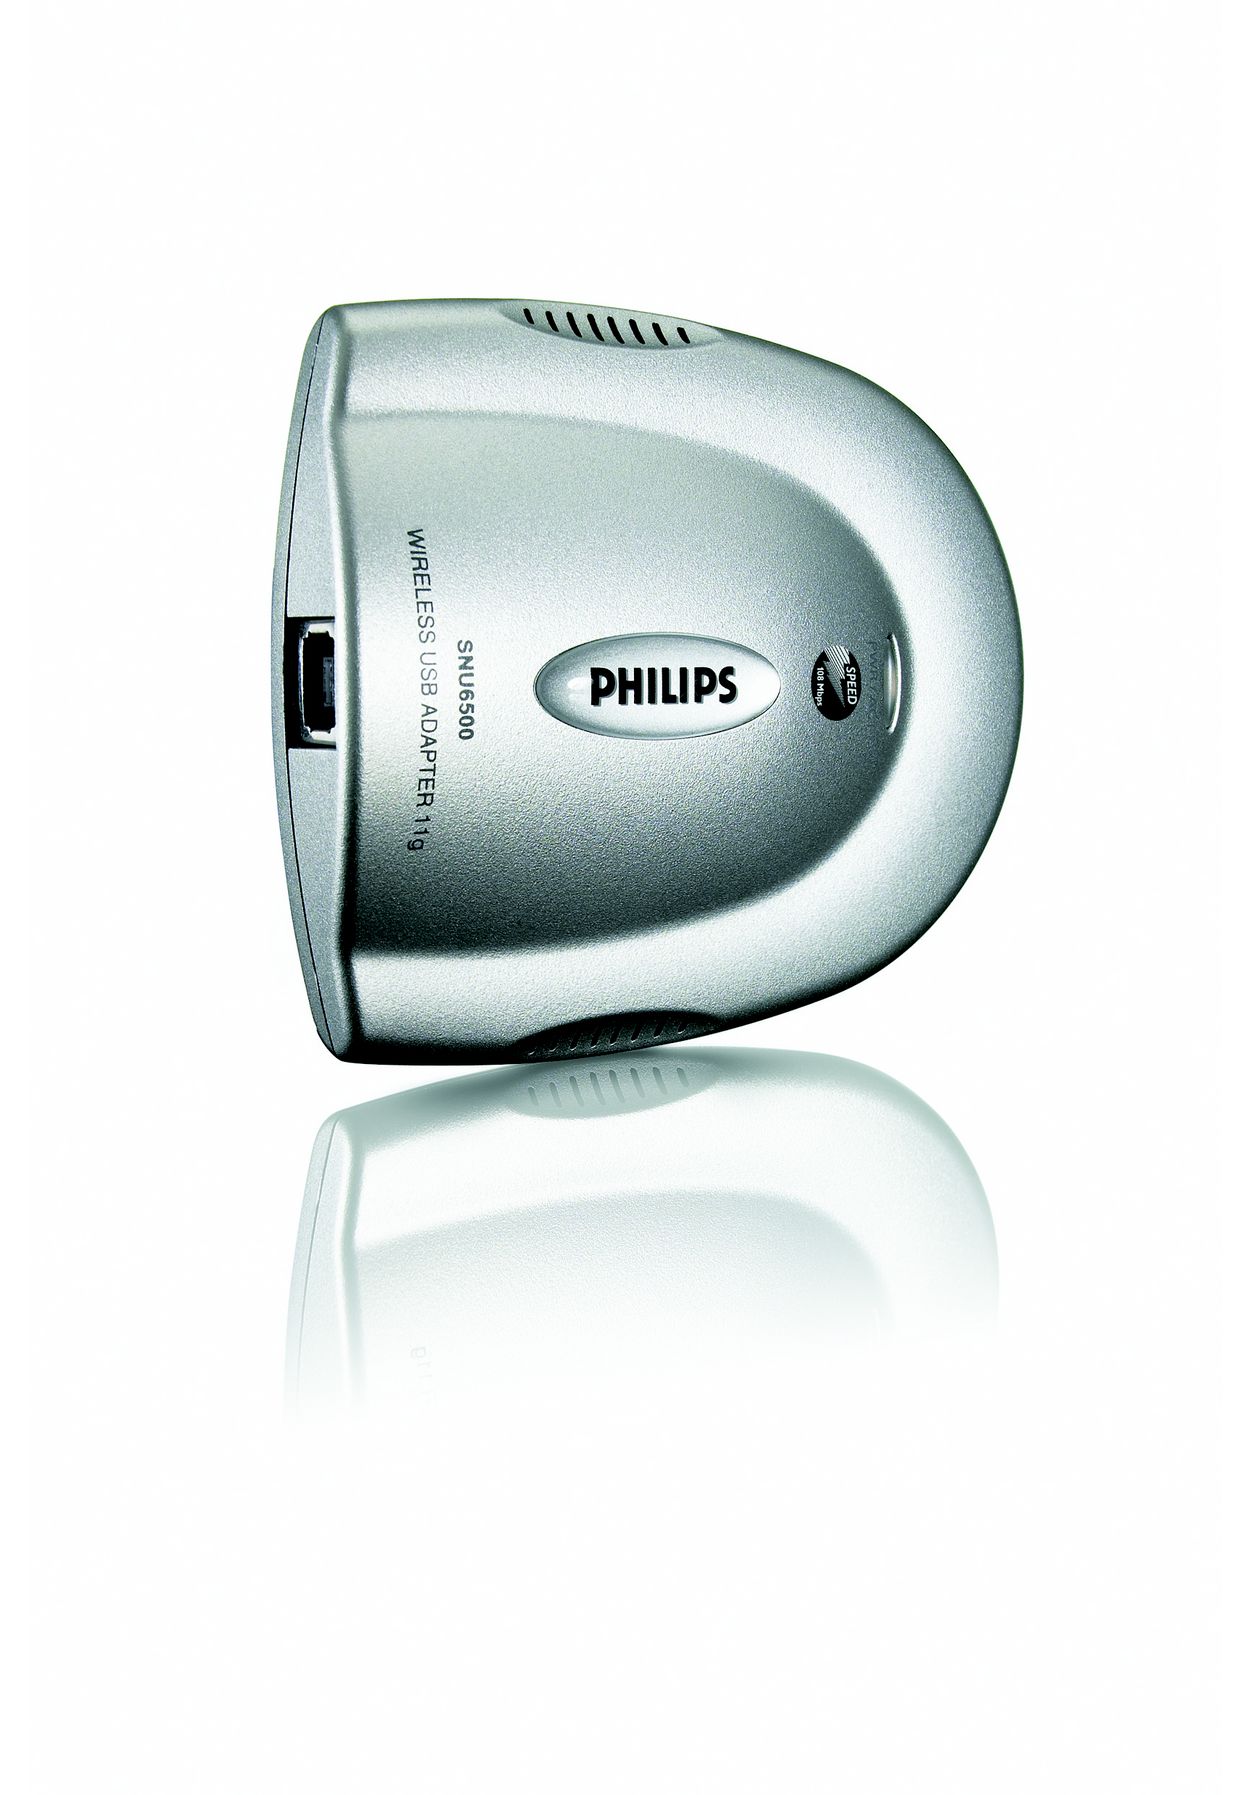 Филипс wifi. Philips с выходом юсб. Philips Turbo Drive. Philips pta128/00 купить.... Philips Keychain Digital Camera p44417s разьем.